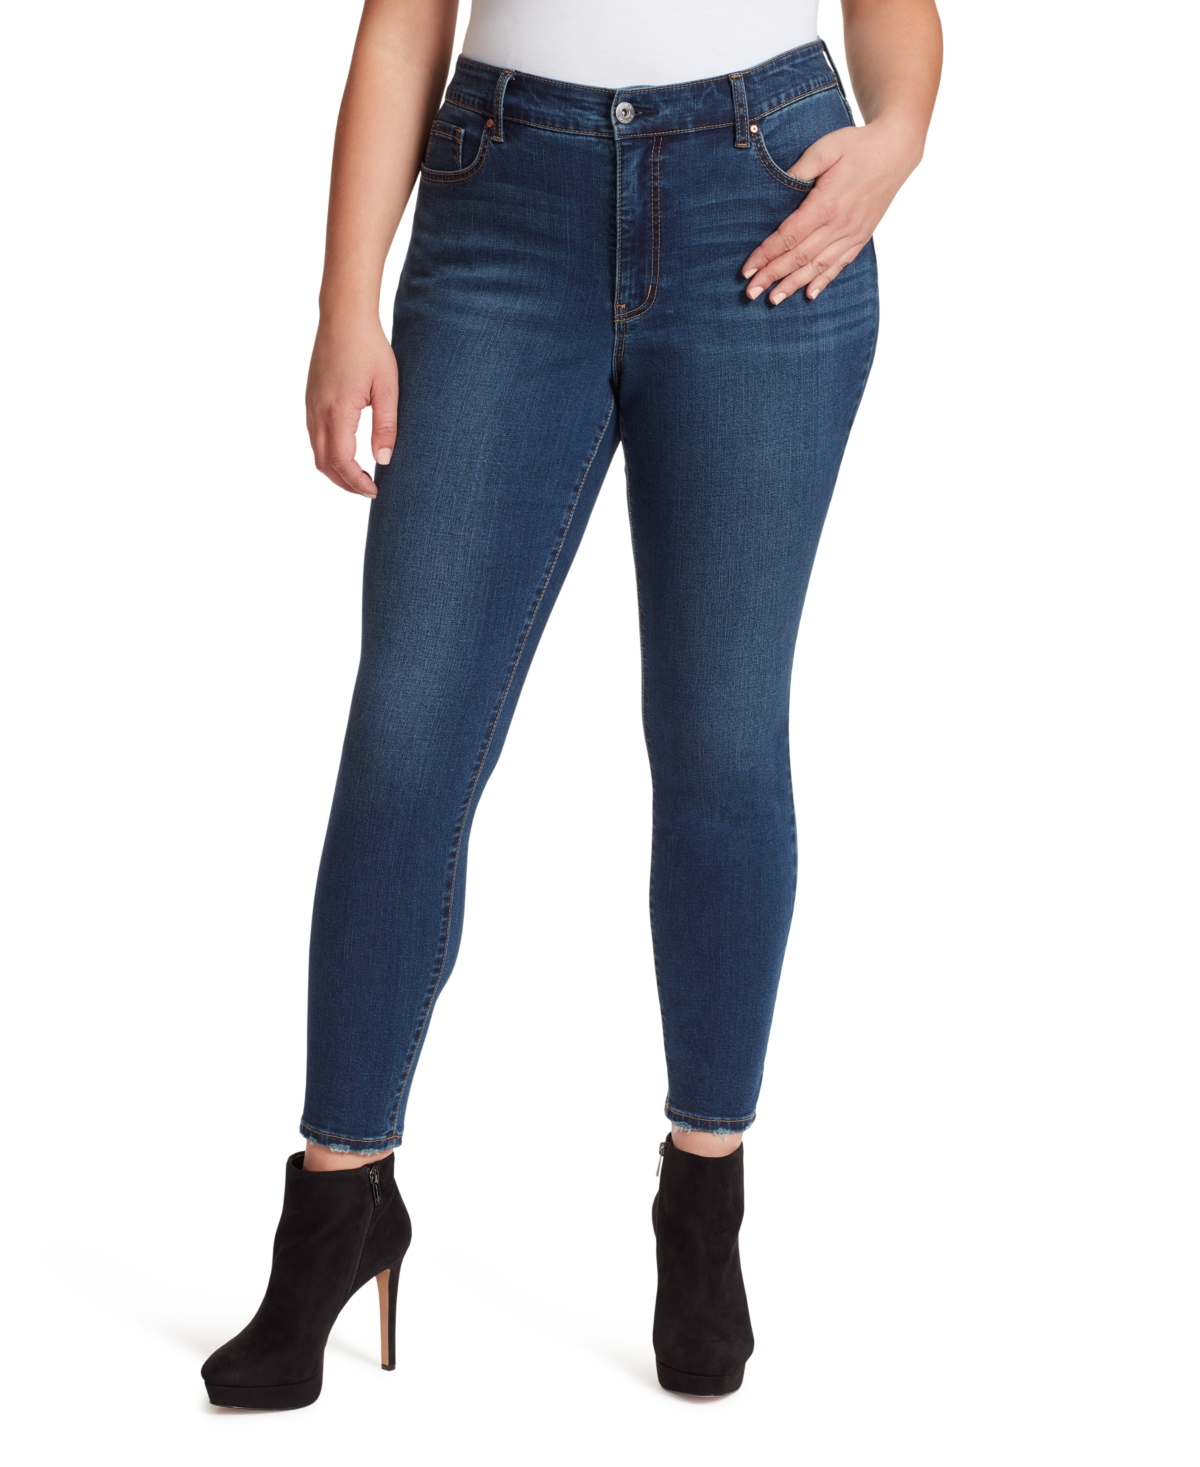 Jessica Simpson Trendy Plus Size Adored Skinny Jeans